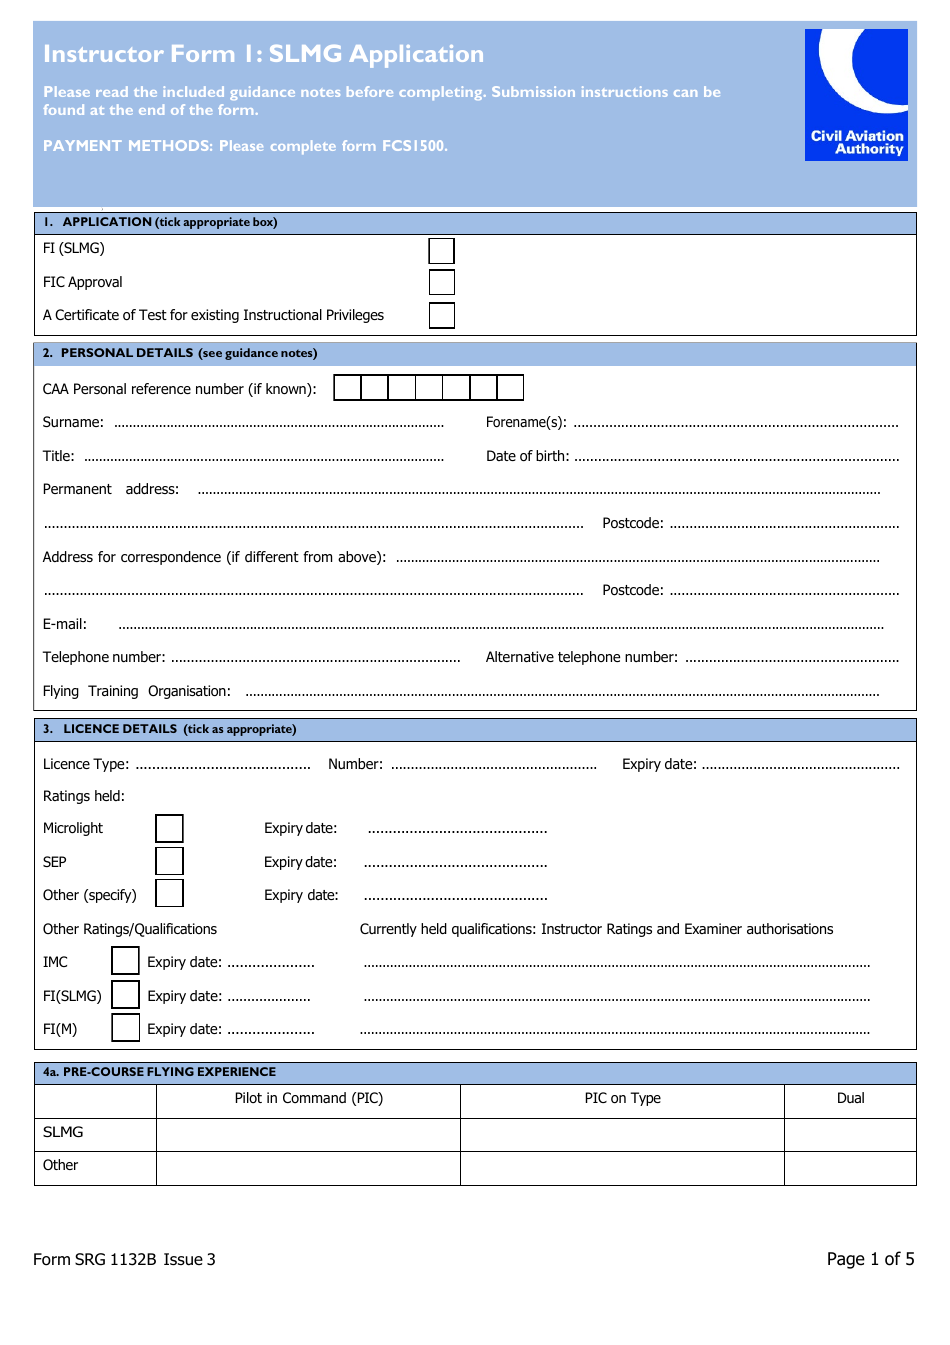 Instructor Form I (SRG1132B) Slmg Application - United Kingdom, Page 1